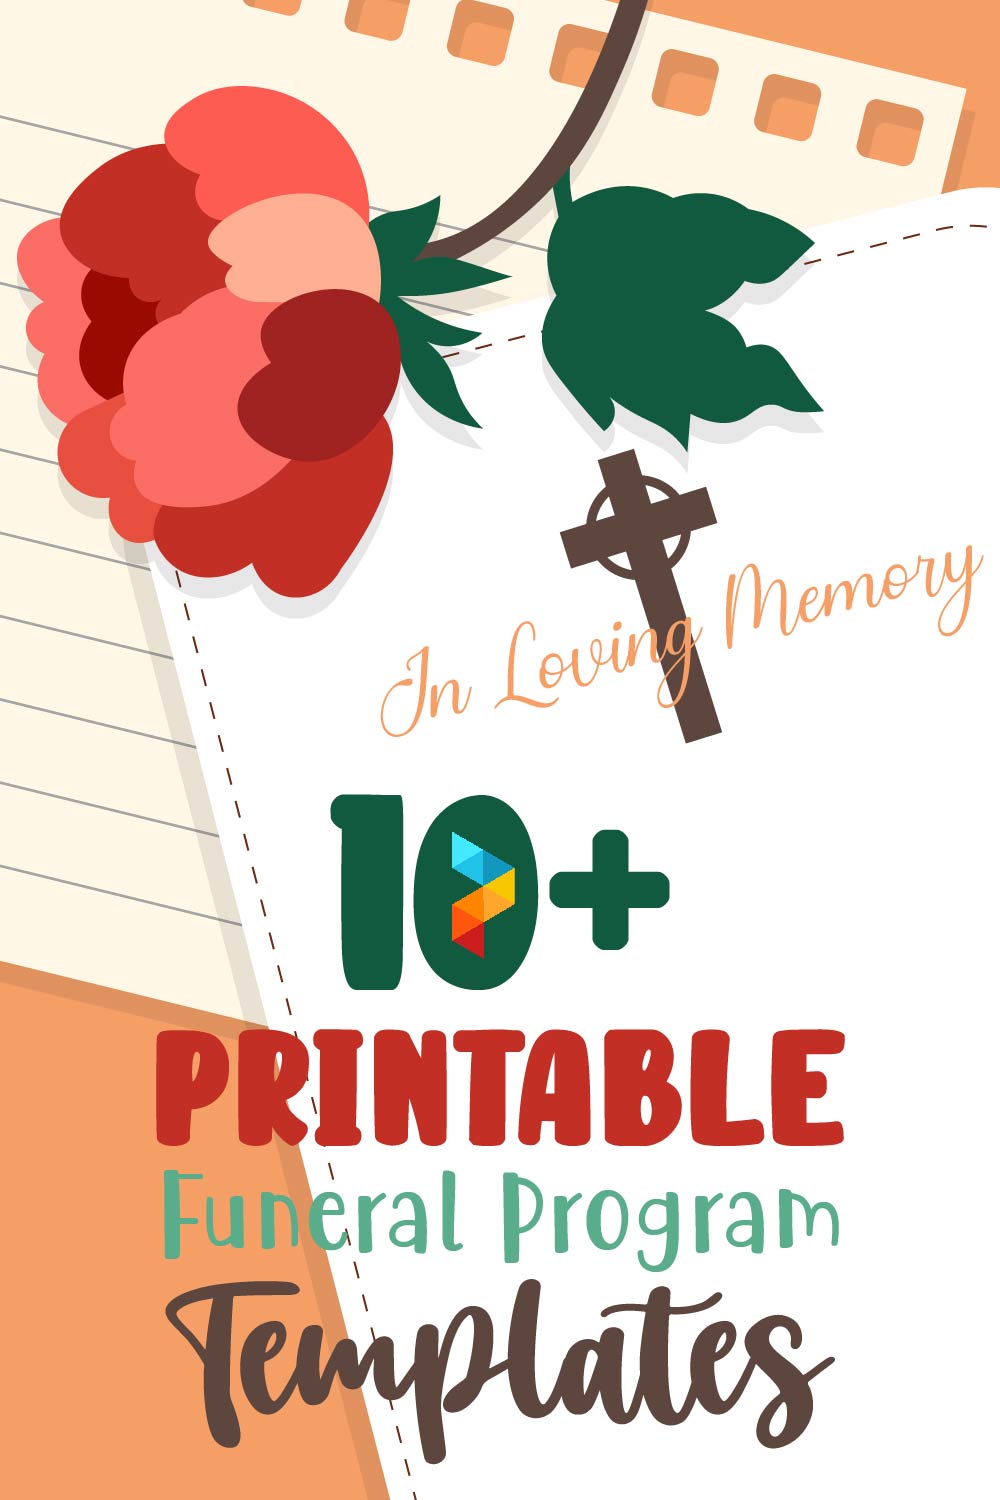 Funeral Program Templates